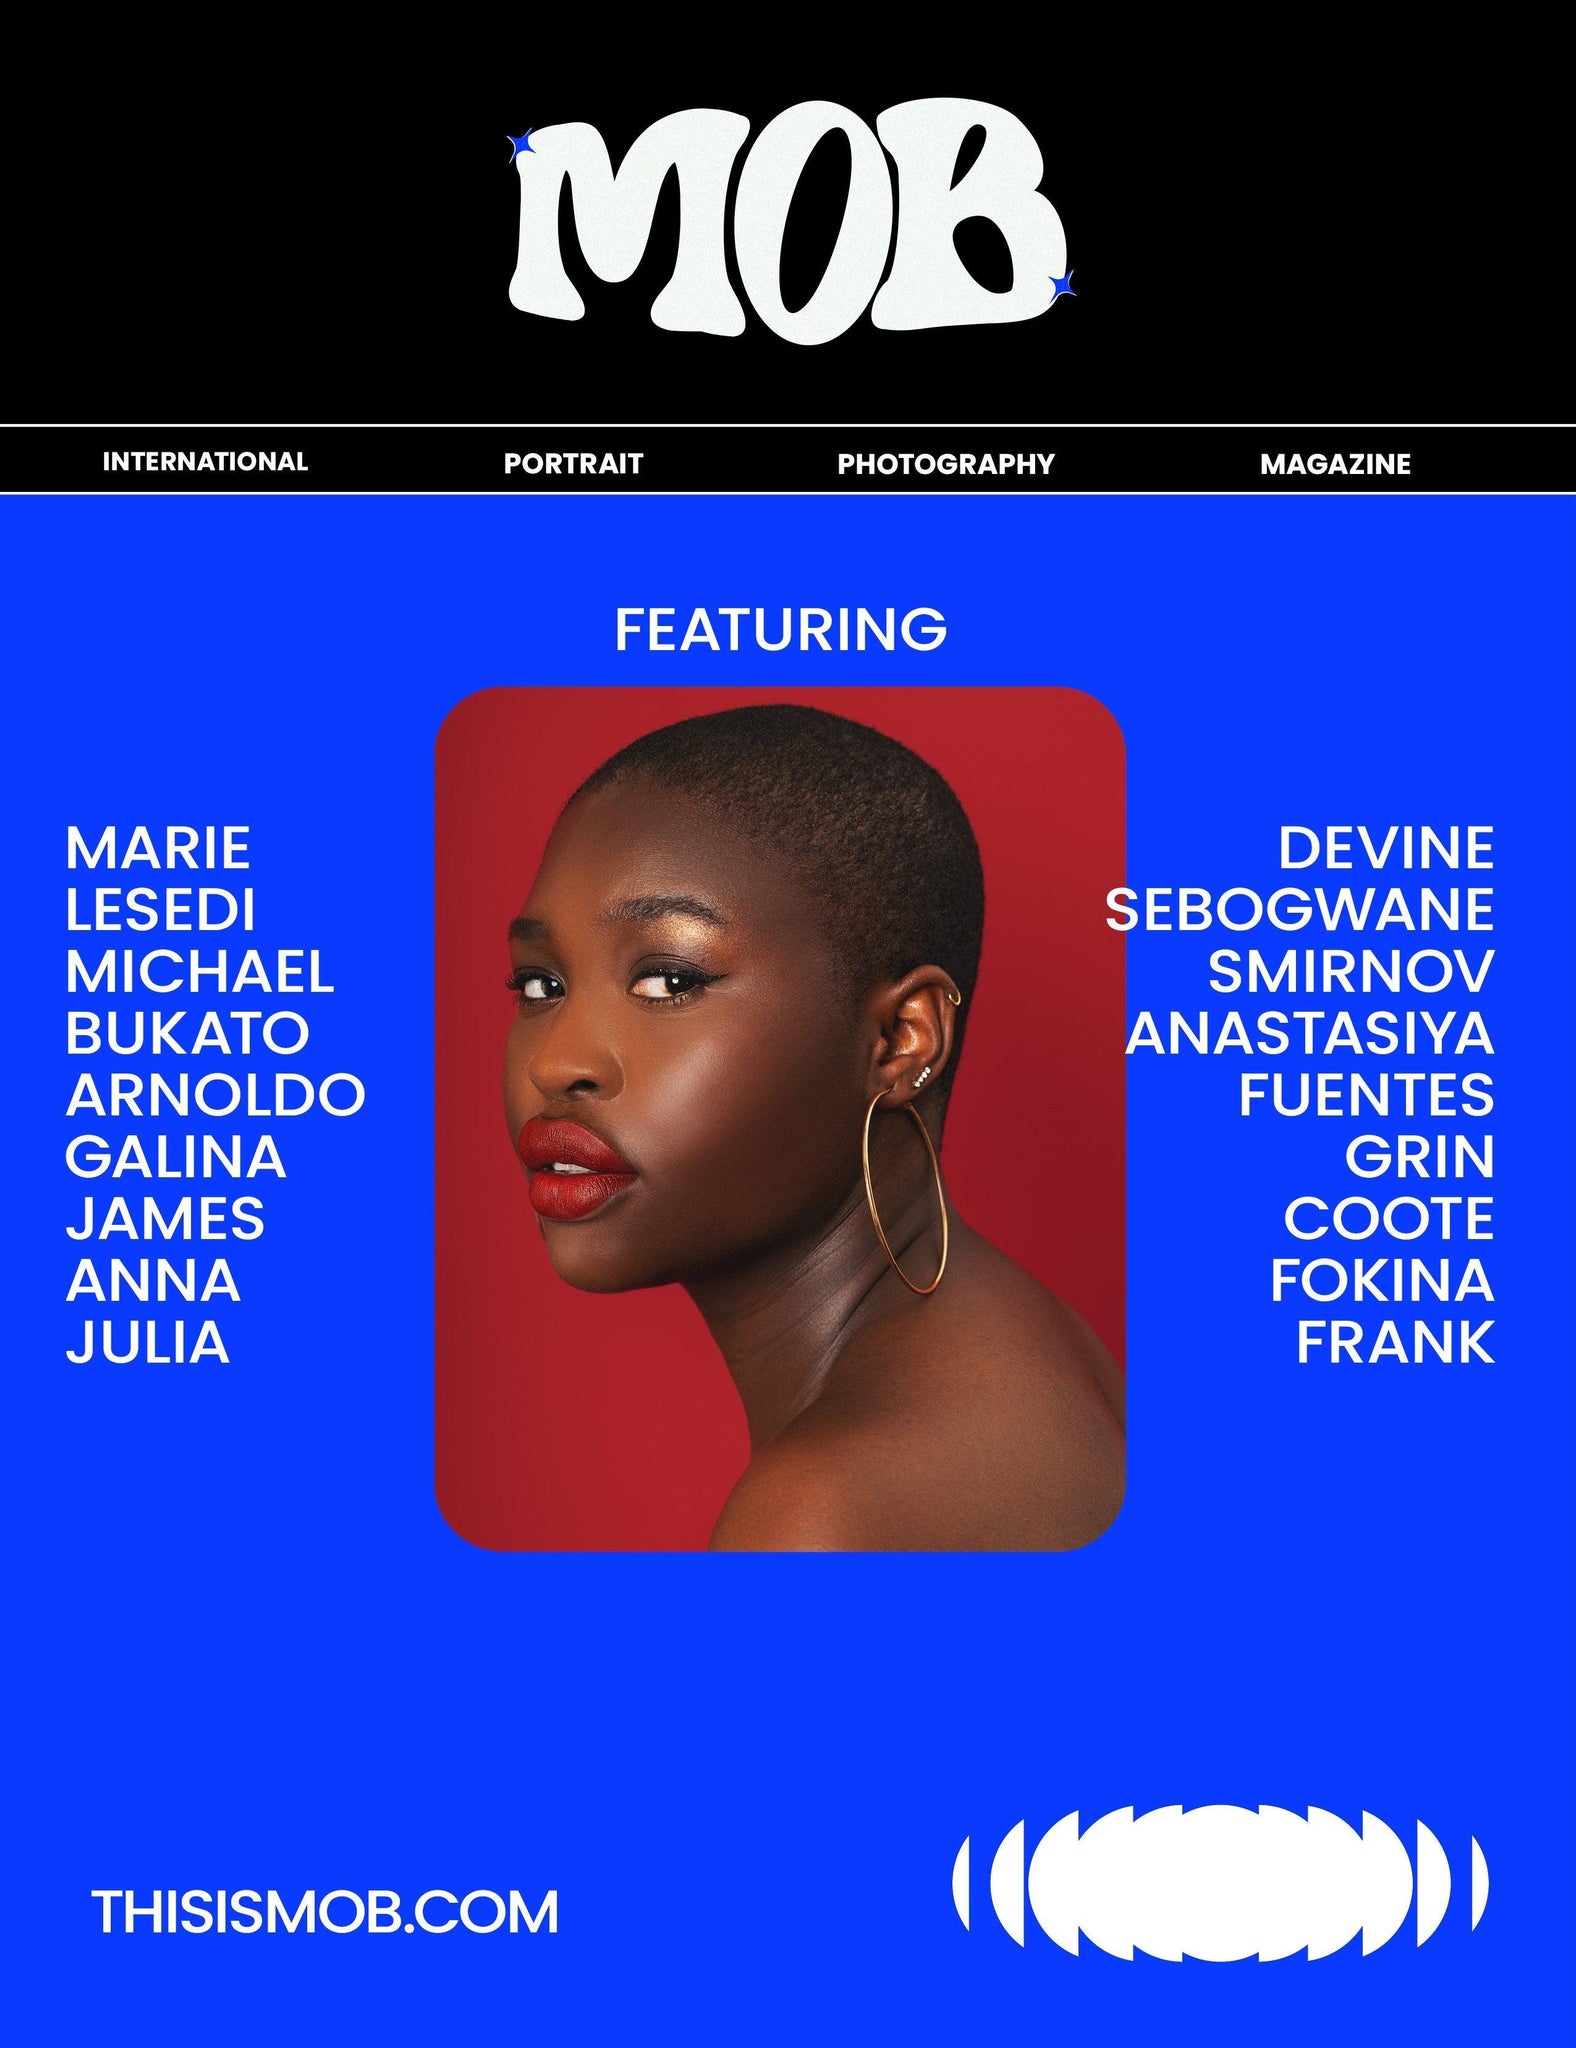 MOB JOURNAL | VOLUME TWENTY SIX | ISSUE #46 - Mob Journal